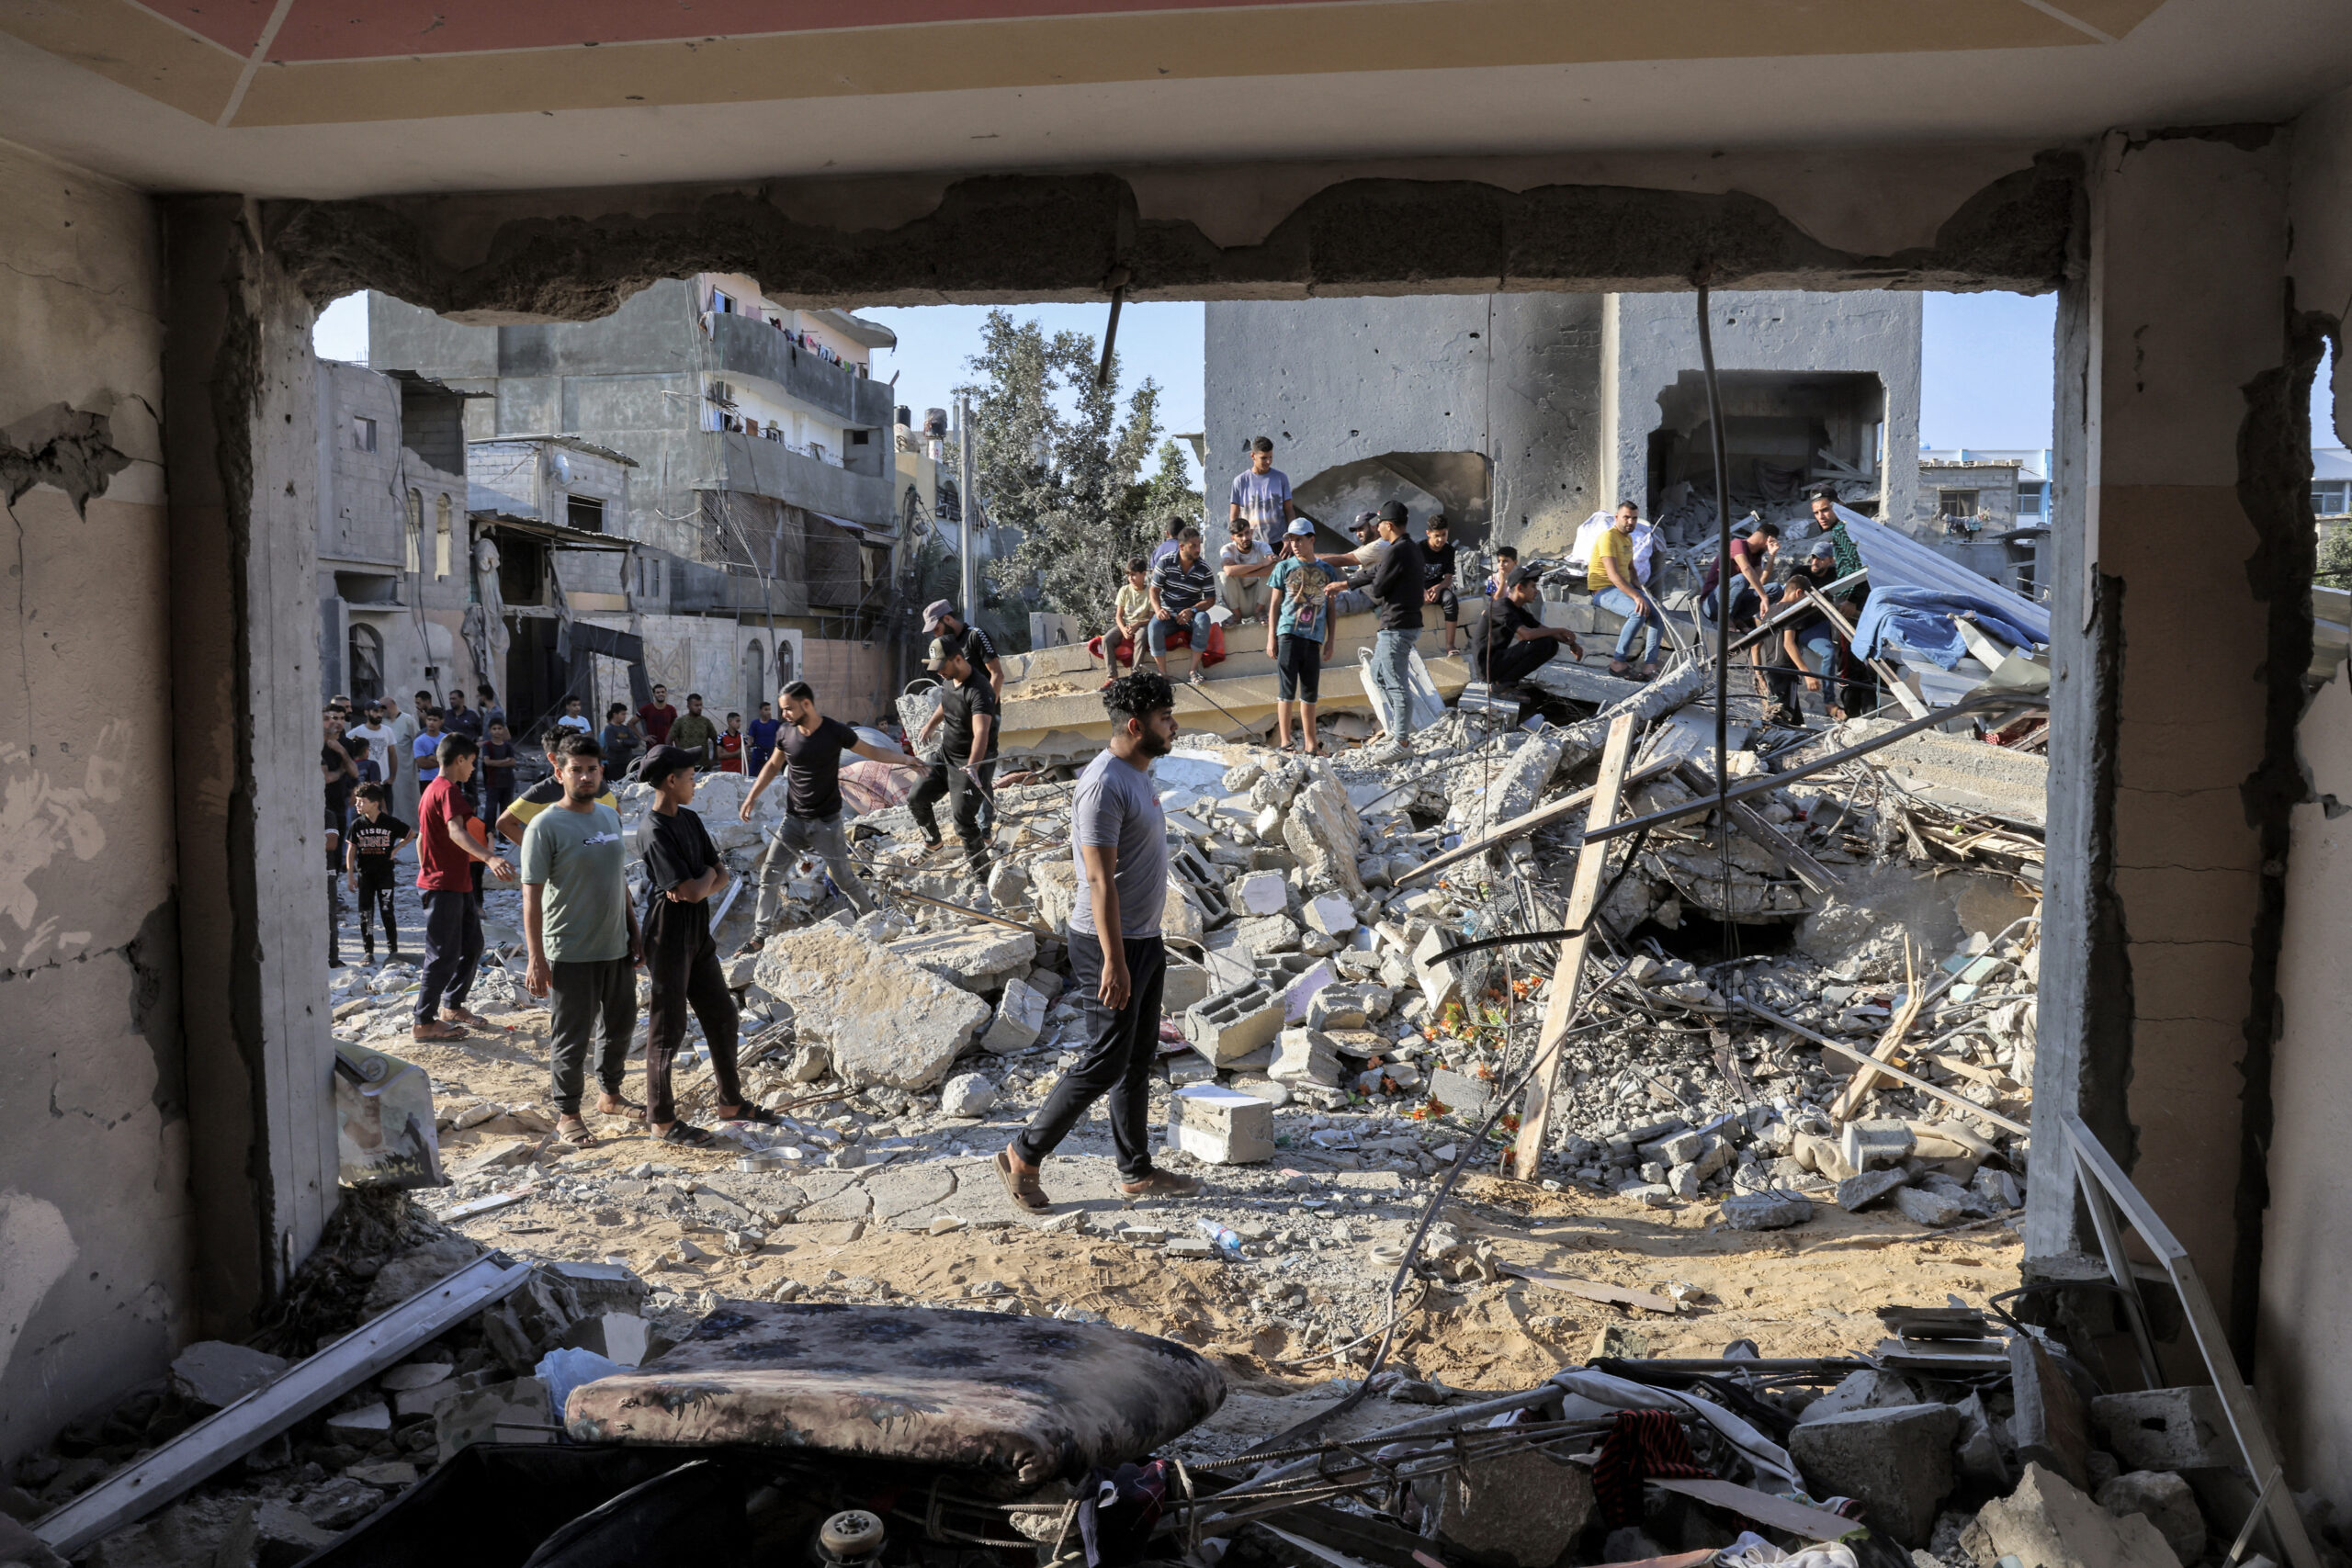 Eχασε την επαφή με τη δημοσιογραφική του ομάδα στη Γάζα το Anadolu